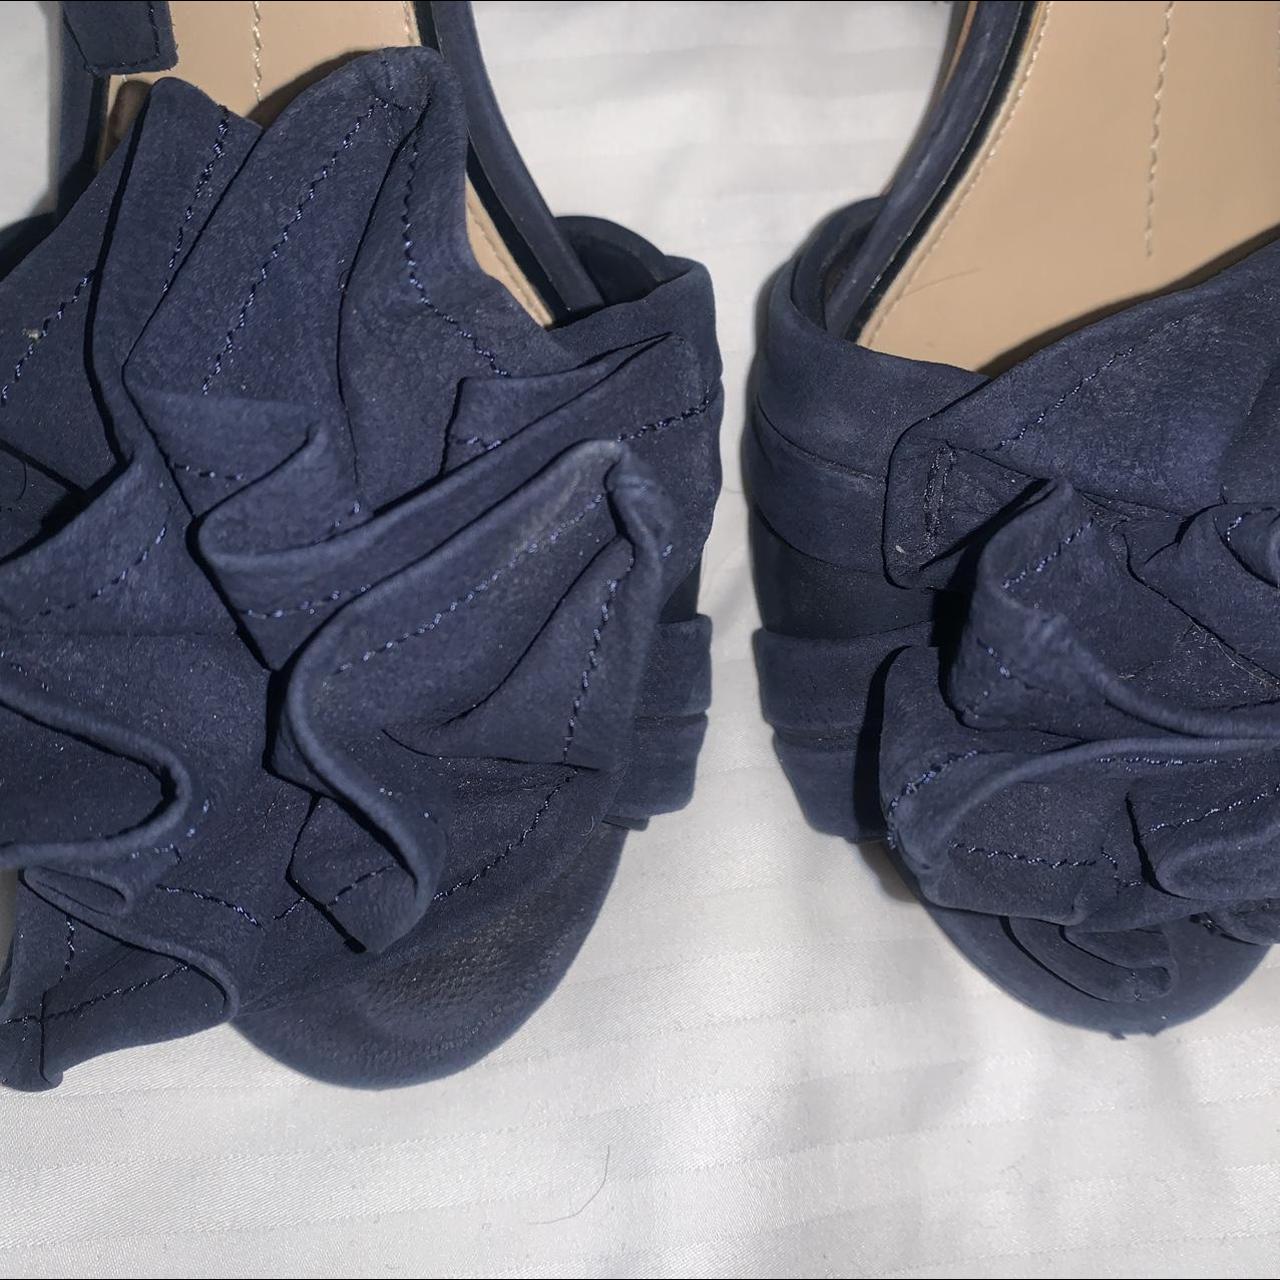 Giani Bernini Women's Navy and Blue Sandals (2)